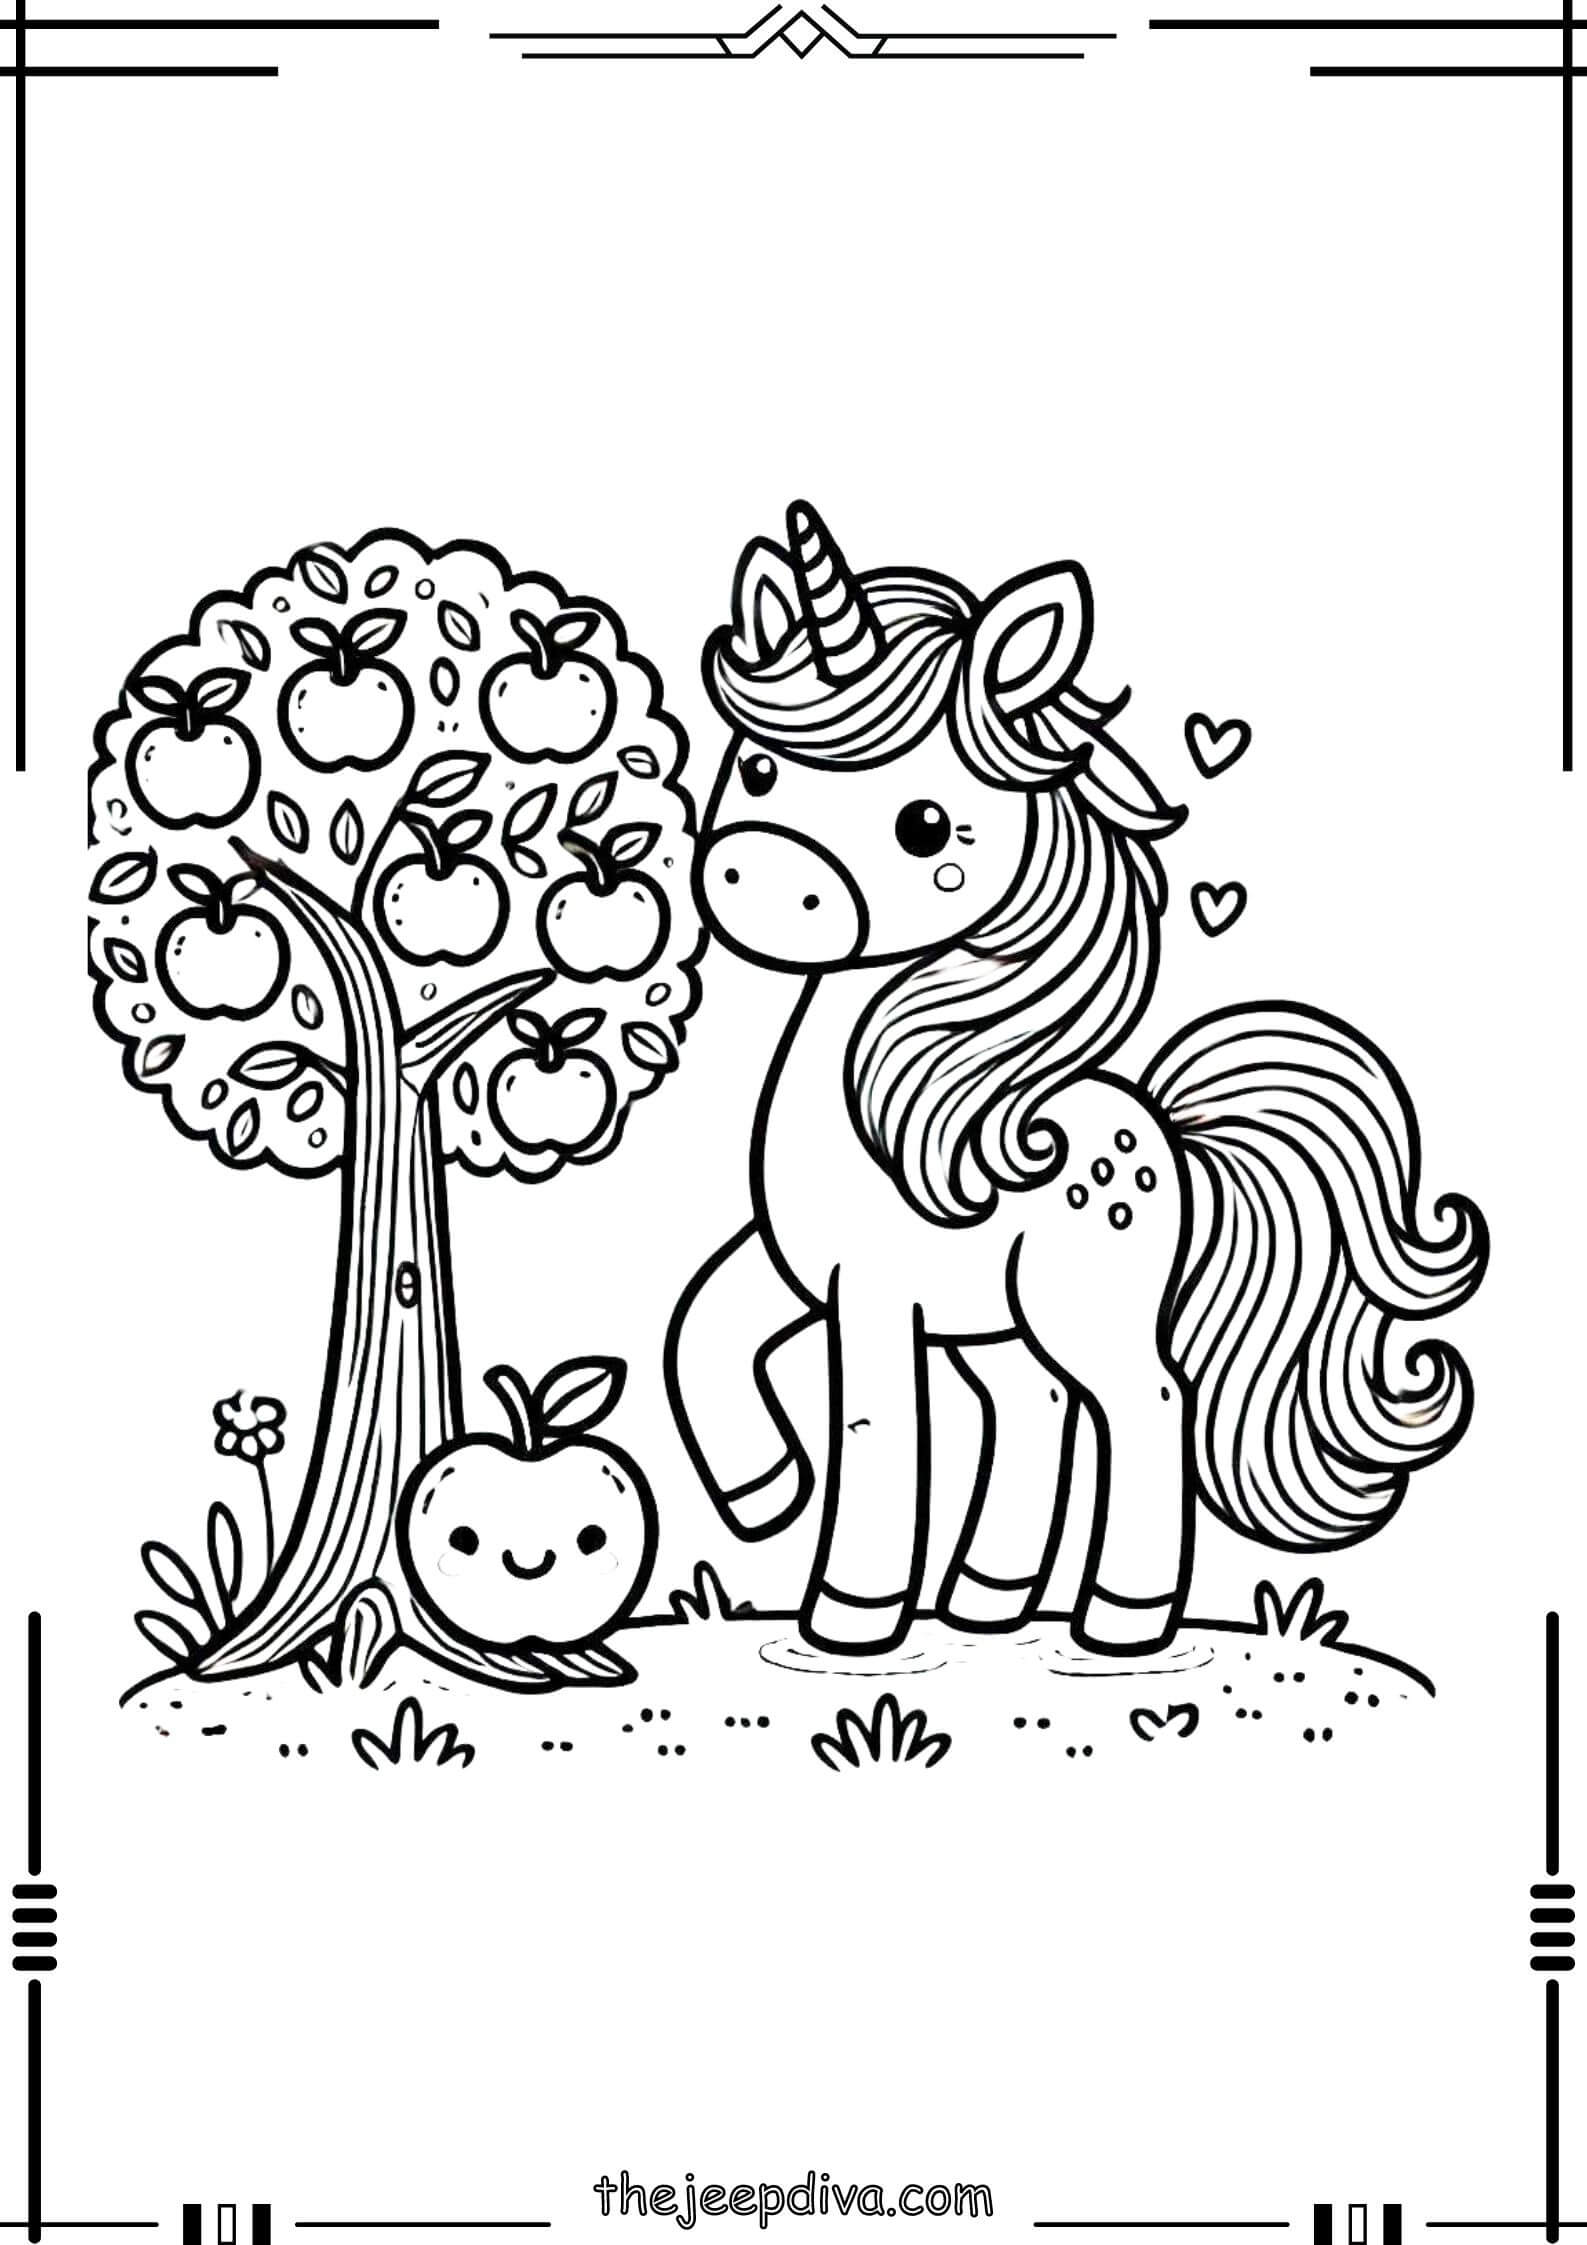 unicorn-coloring-page-medium-12